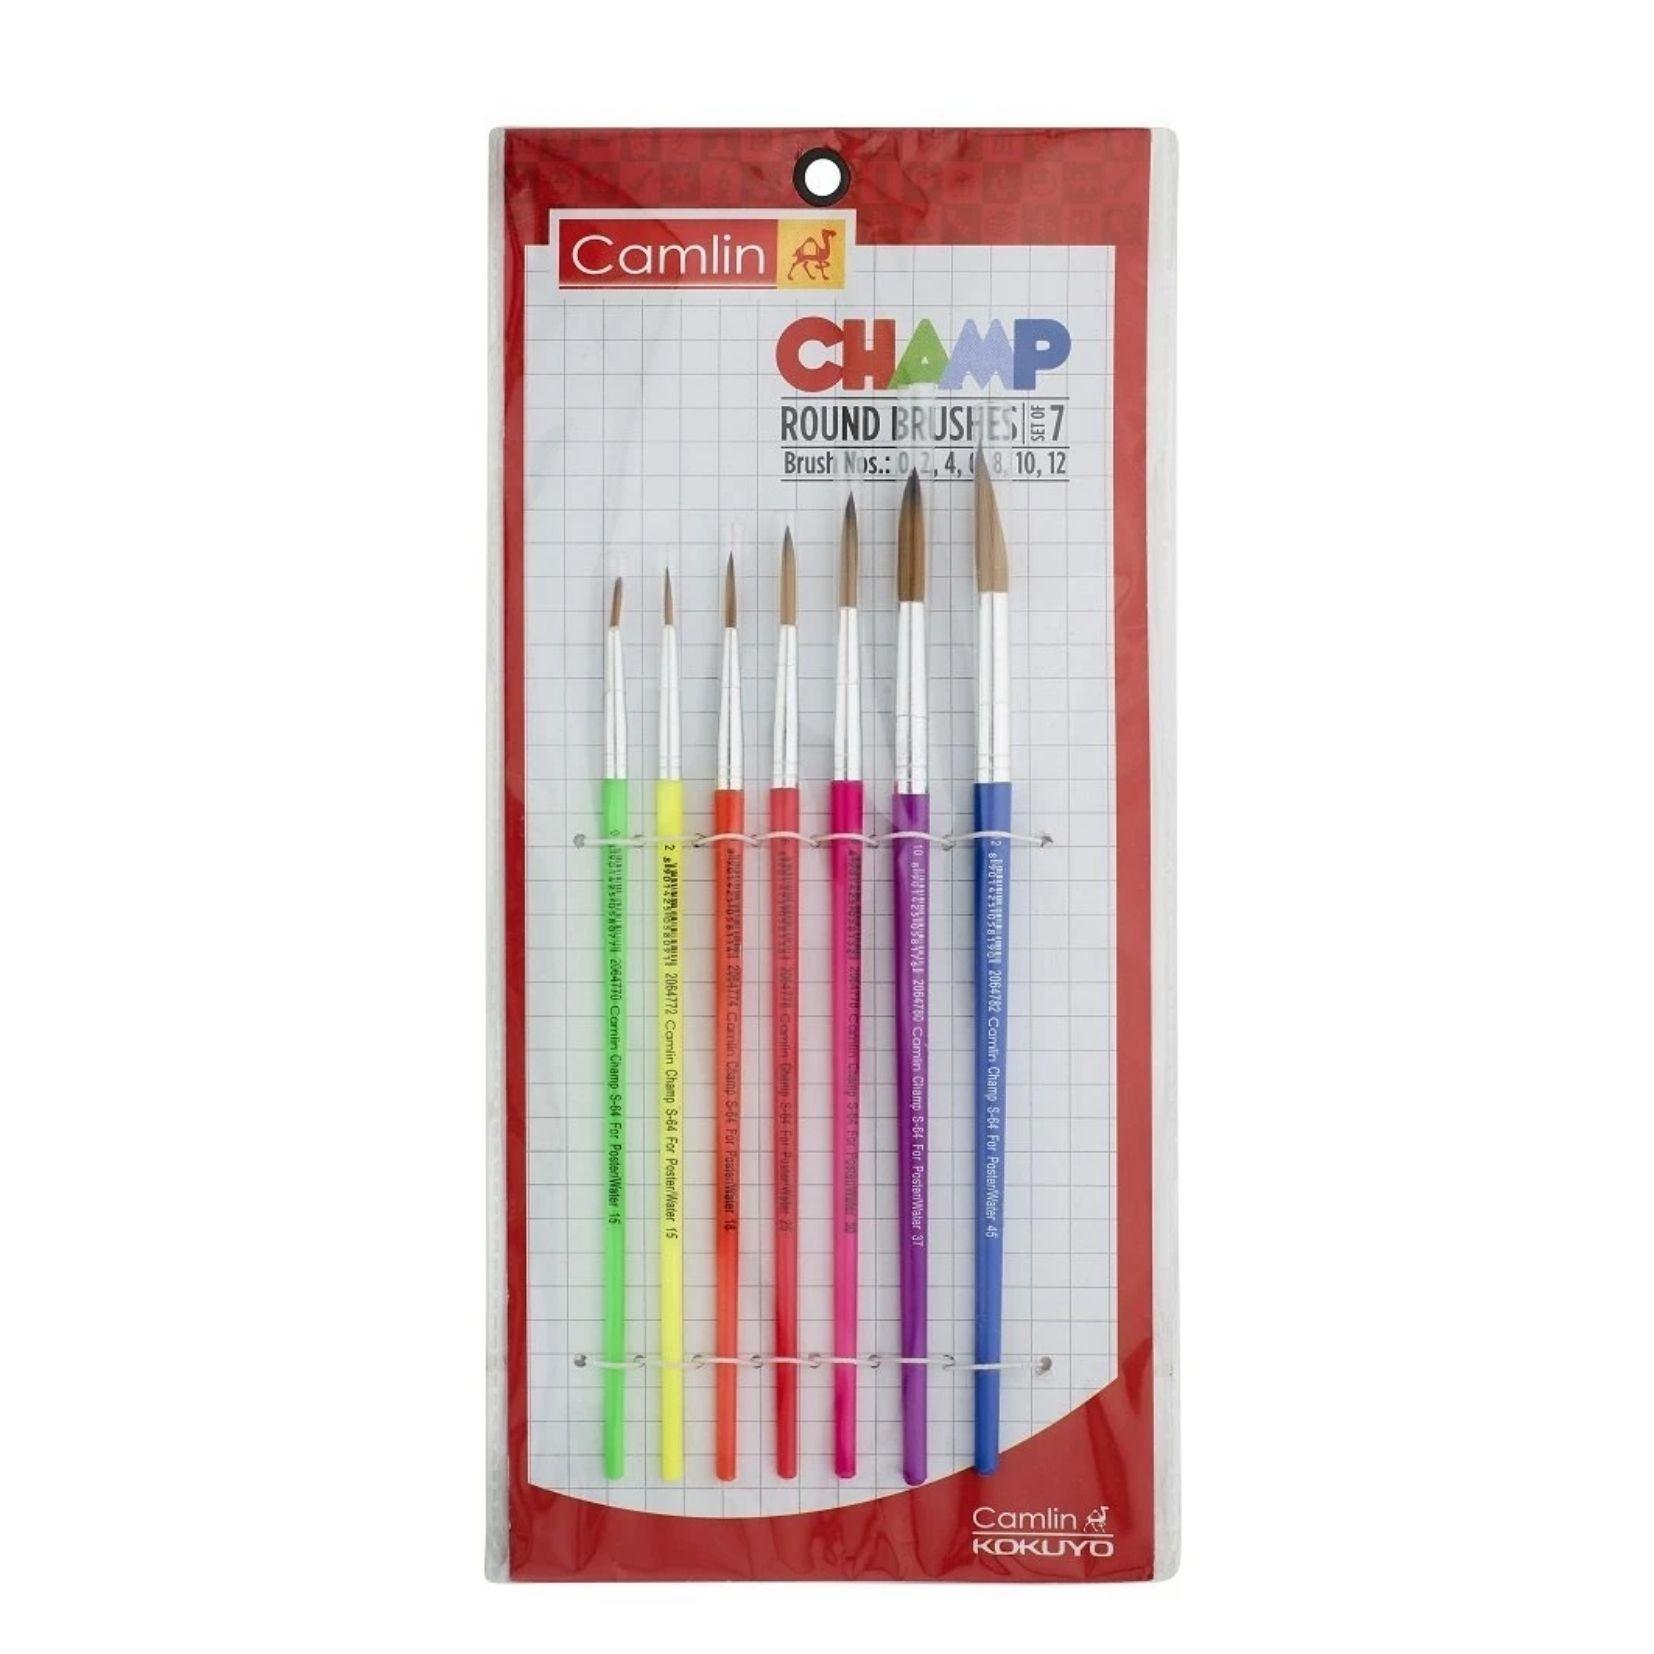 Camlin Champ Round Brush Set - Pack of 7 (Multicolor) - Artoodlesstore